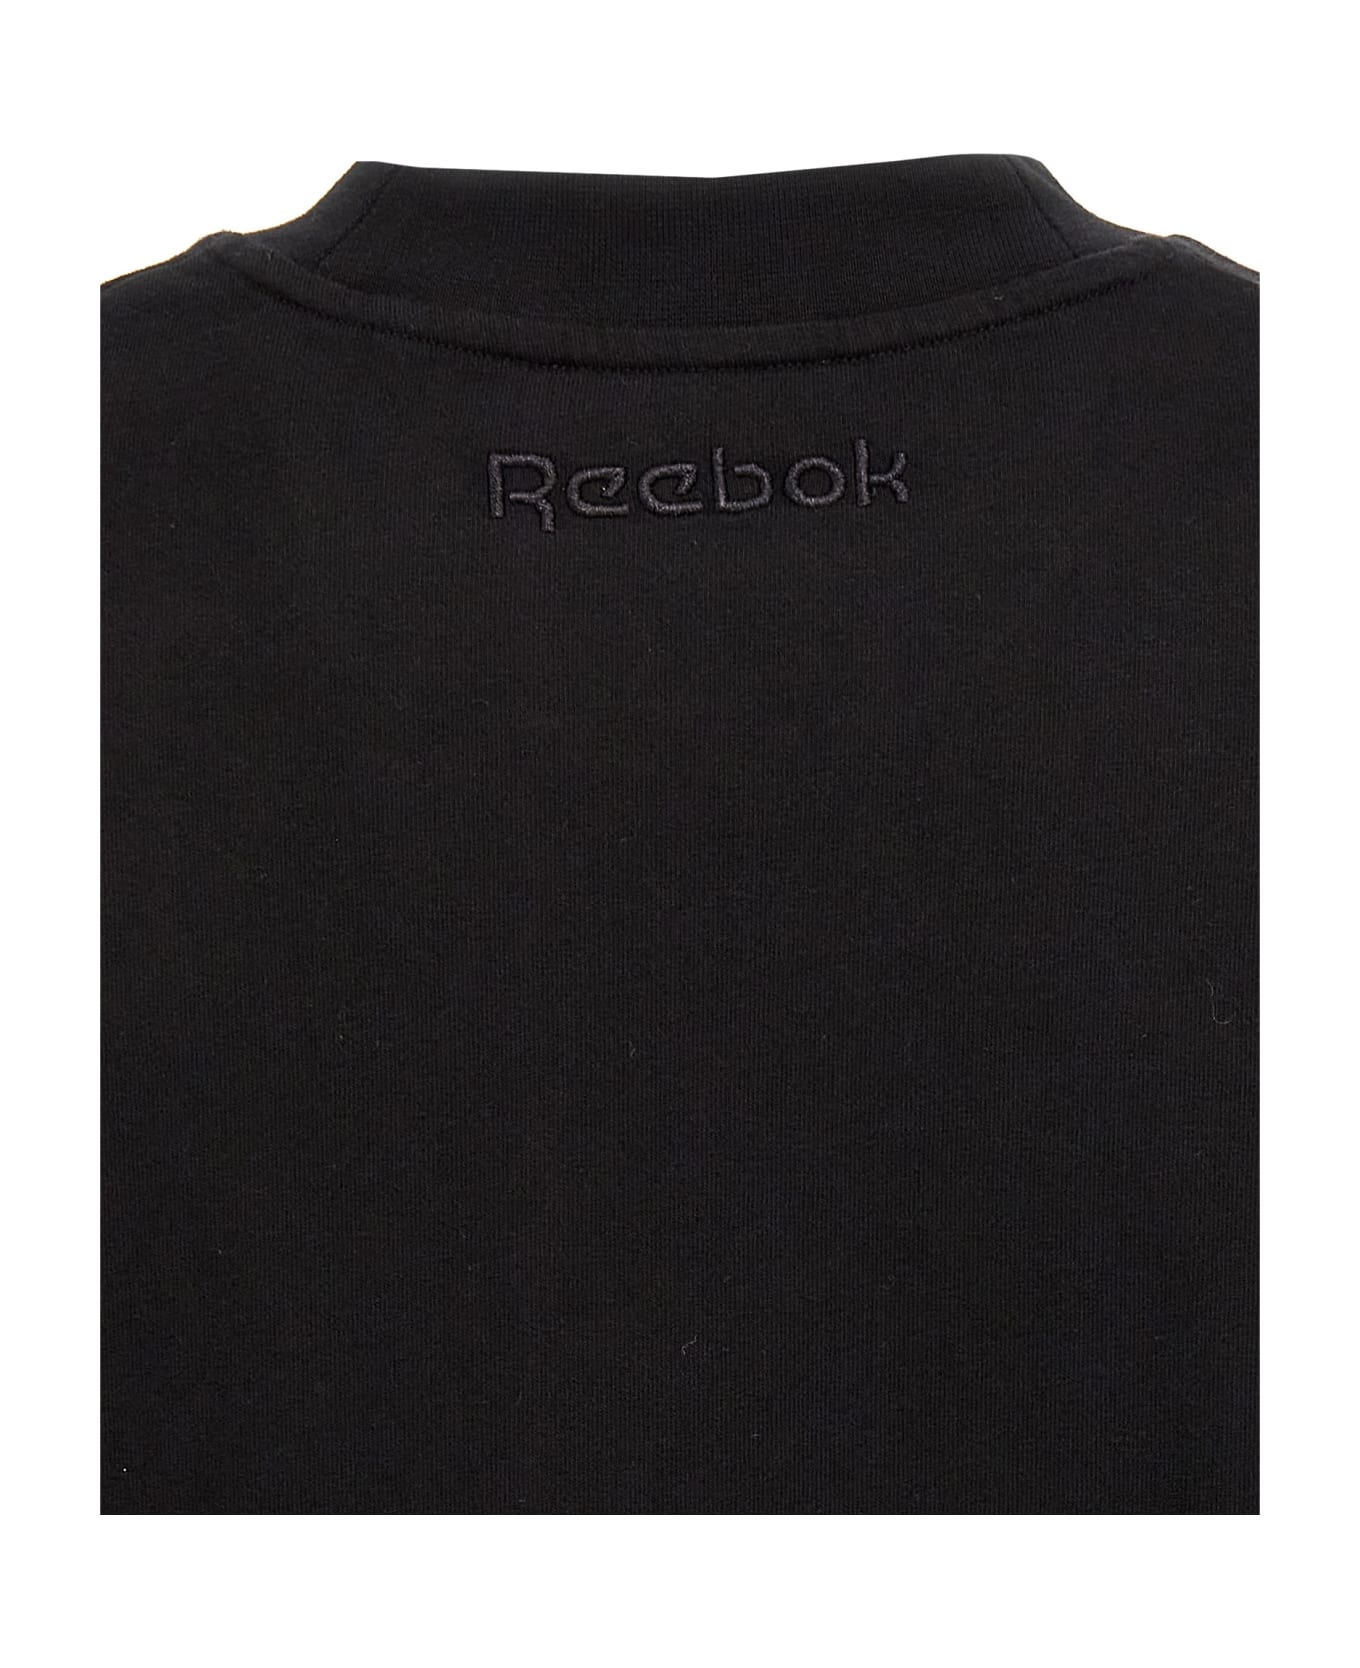 Reebok Logo Embroidery T-shirt - Black  